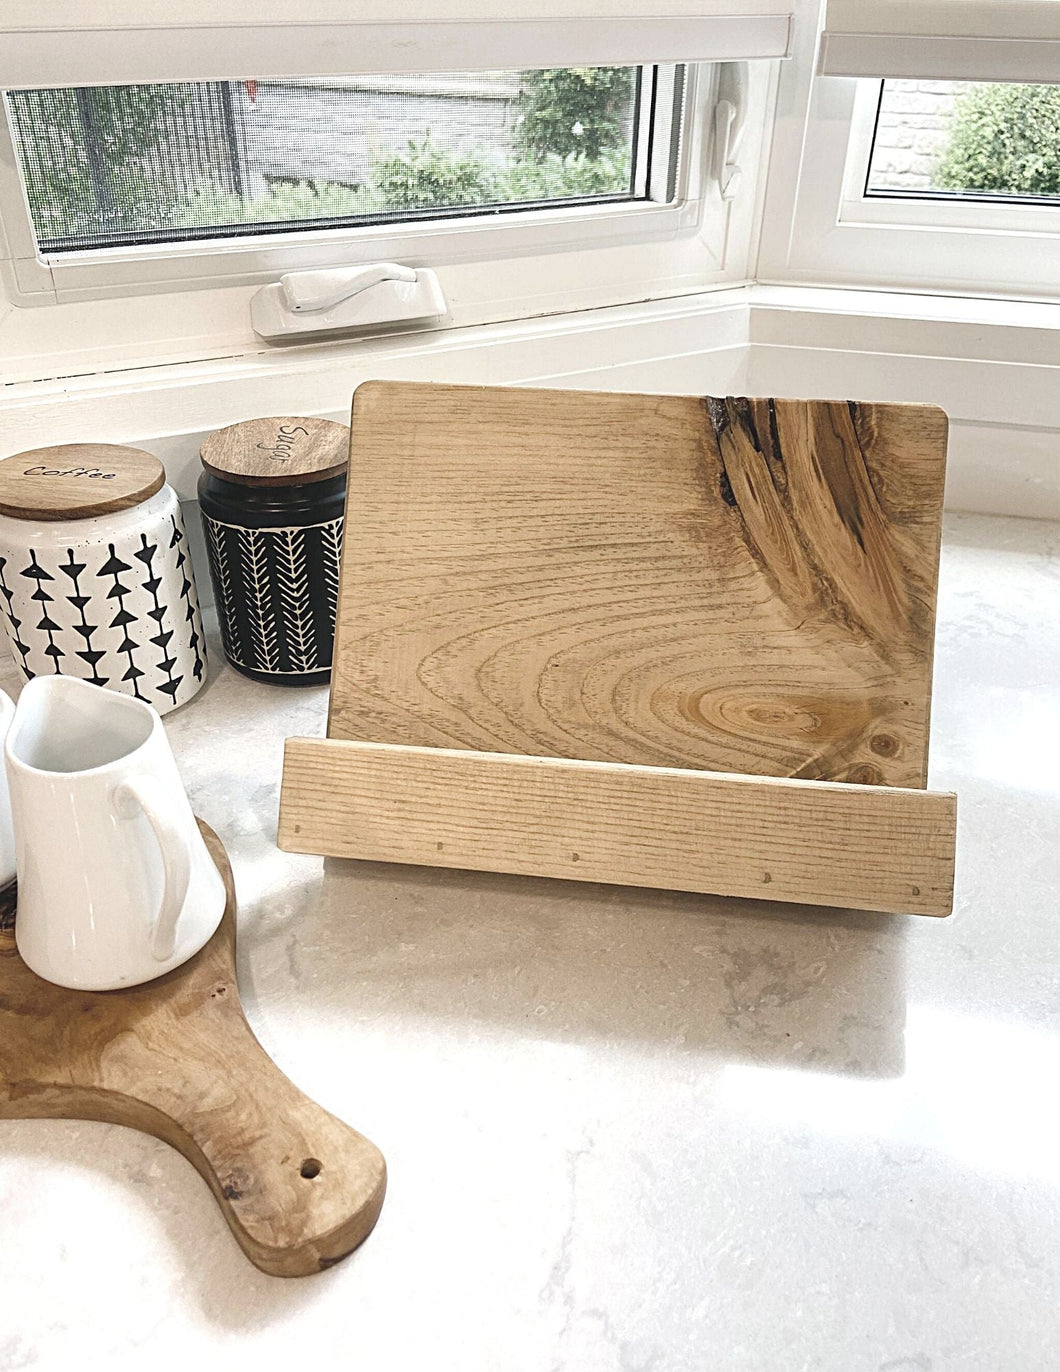 Wooden Cookbook Stand